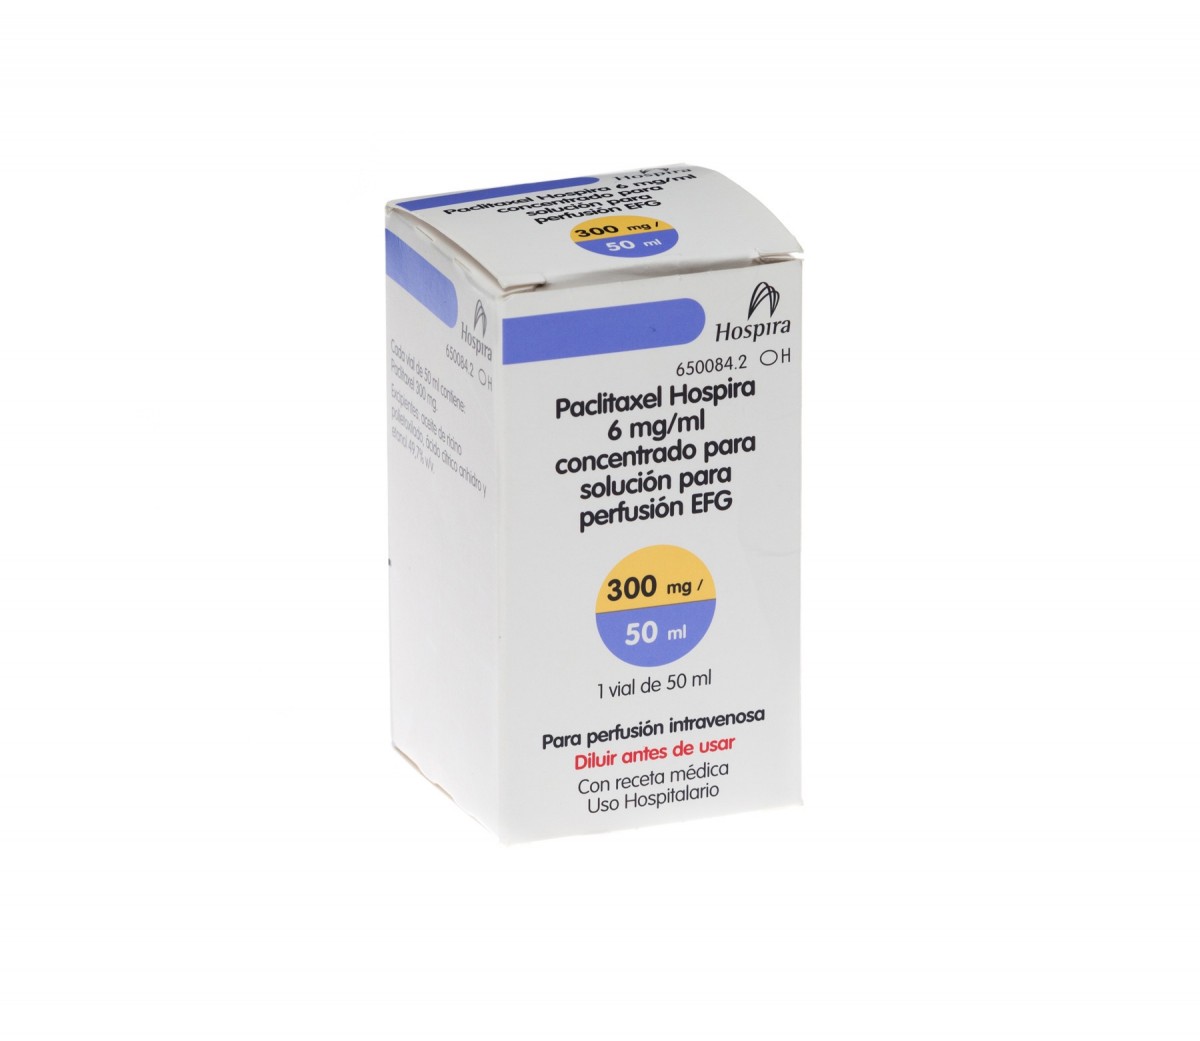 PACLITAXEL HOSPIRA 6 mg/ml CONCENTRADO PARA SOLUCION PARA PERFUSION EFG , 1 vial de 50 ml fotografía del envase.